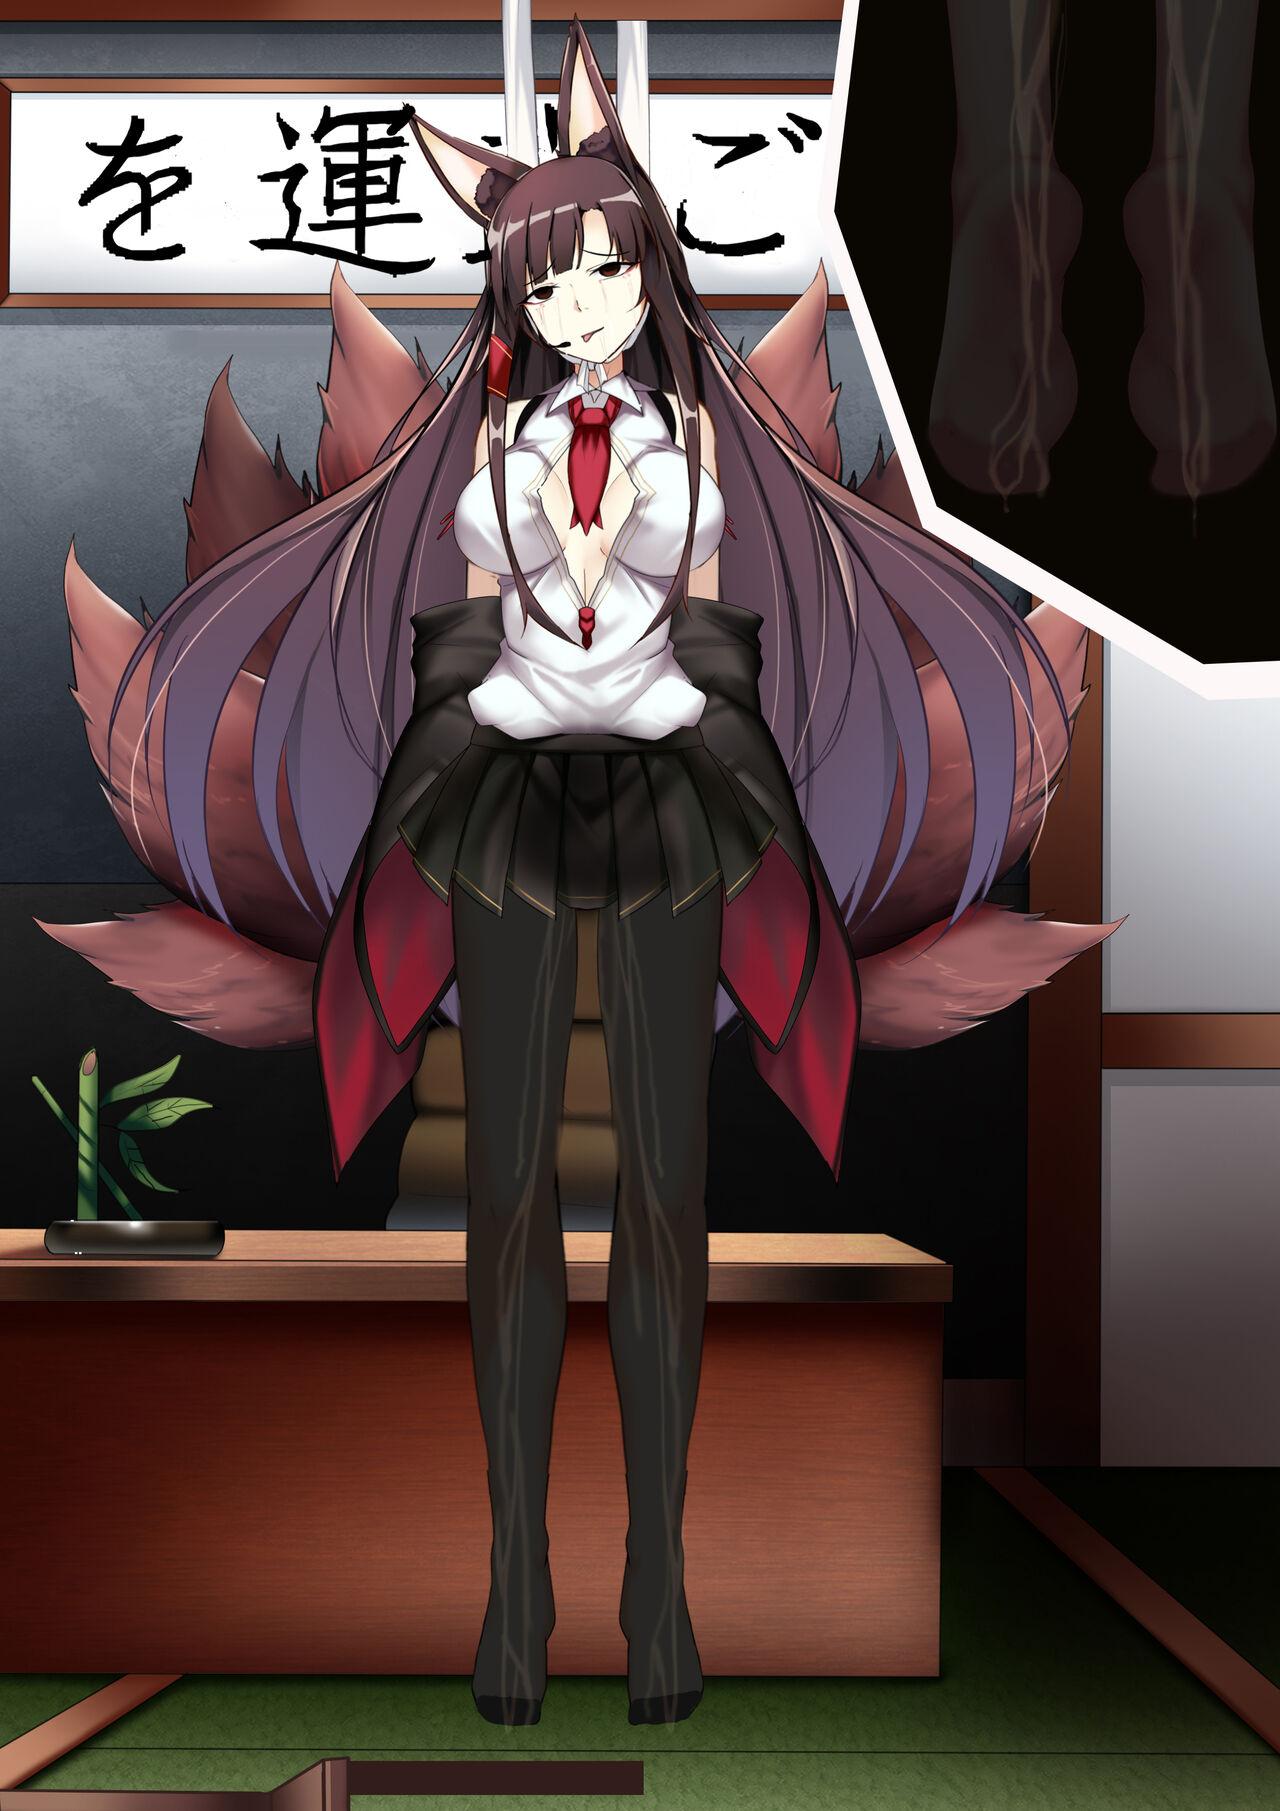 Akagi hanged herself in her office 49